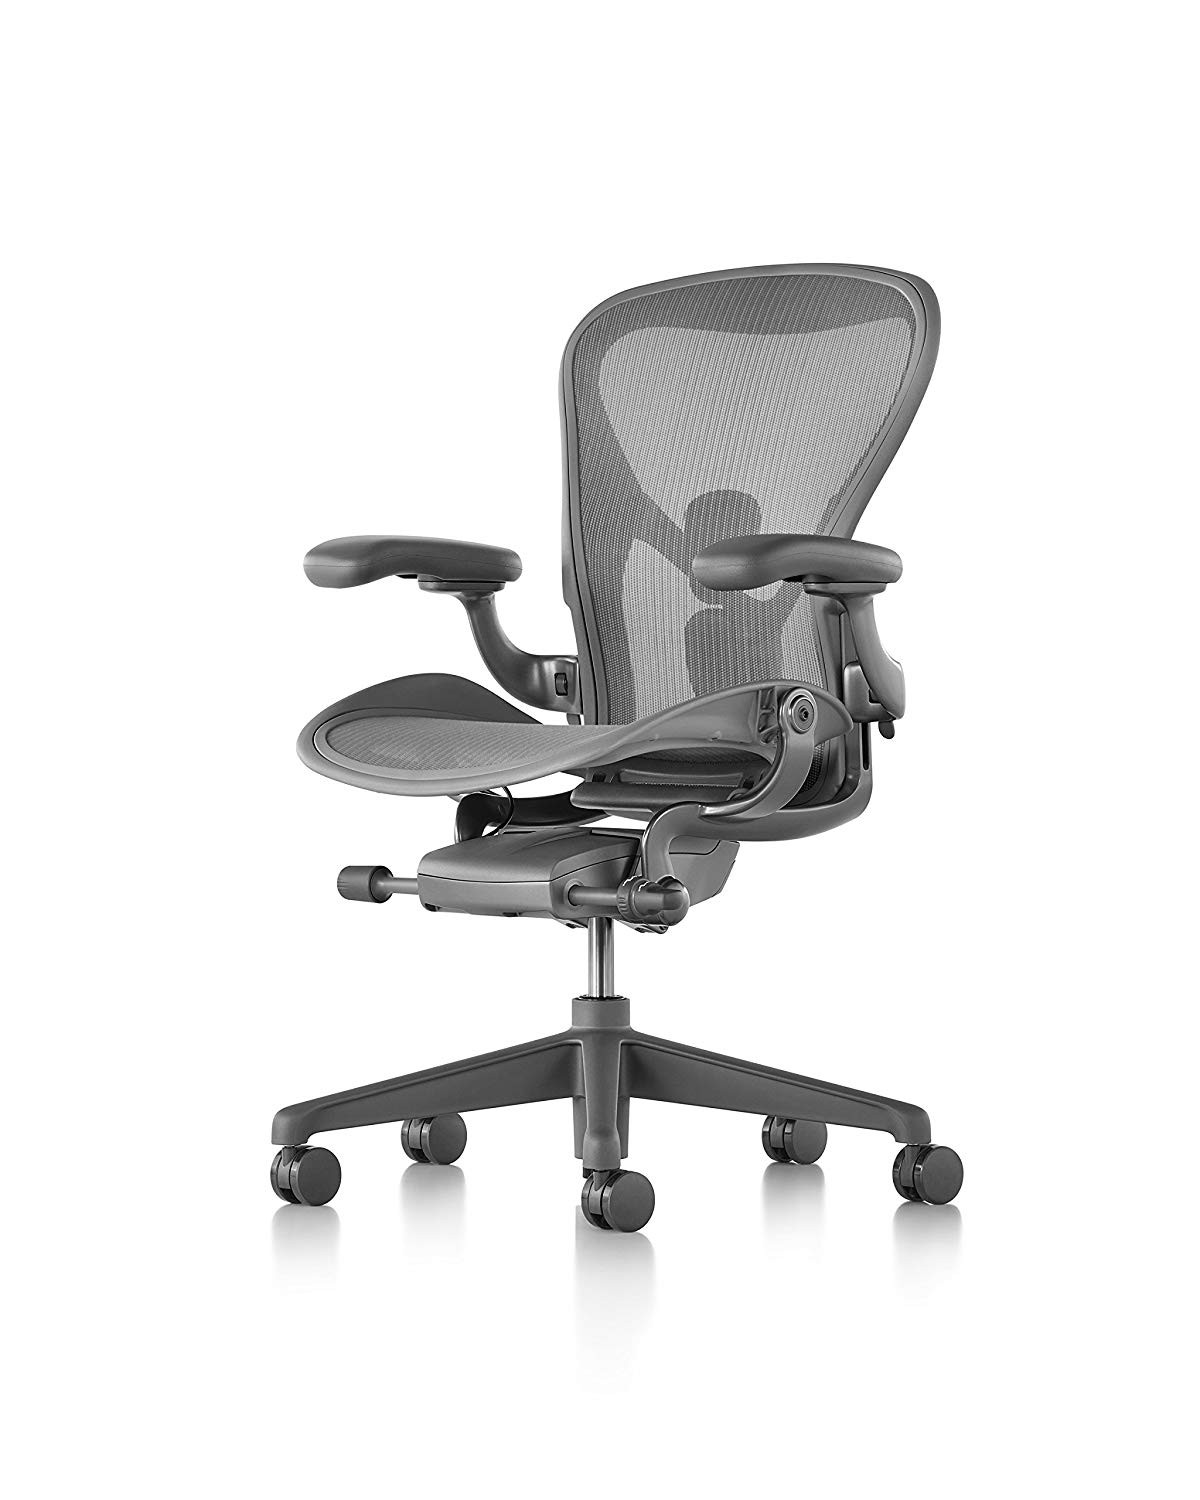 Best ideas about Aeron Chair Sizes
. Save or Pin Herman Miller AER1B23DWALPVPRSNADVPBBDVP B Size Aeron Now.